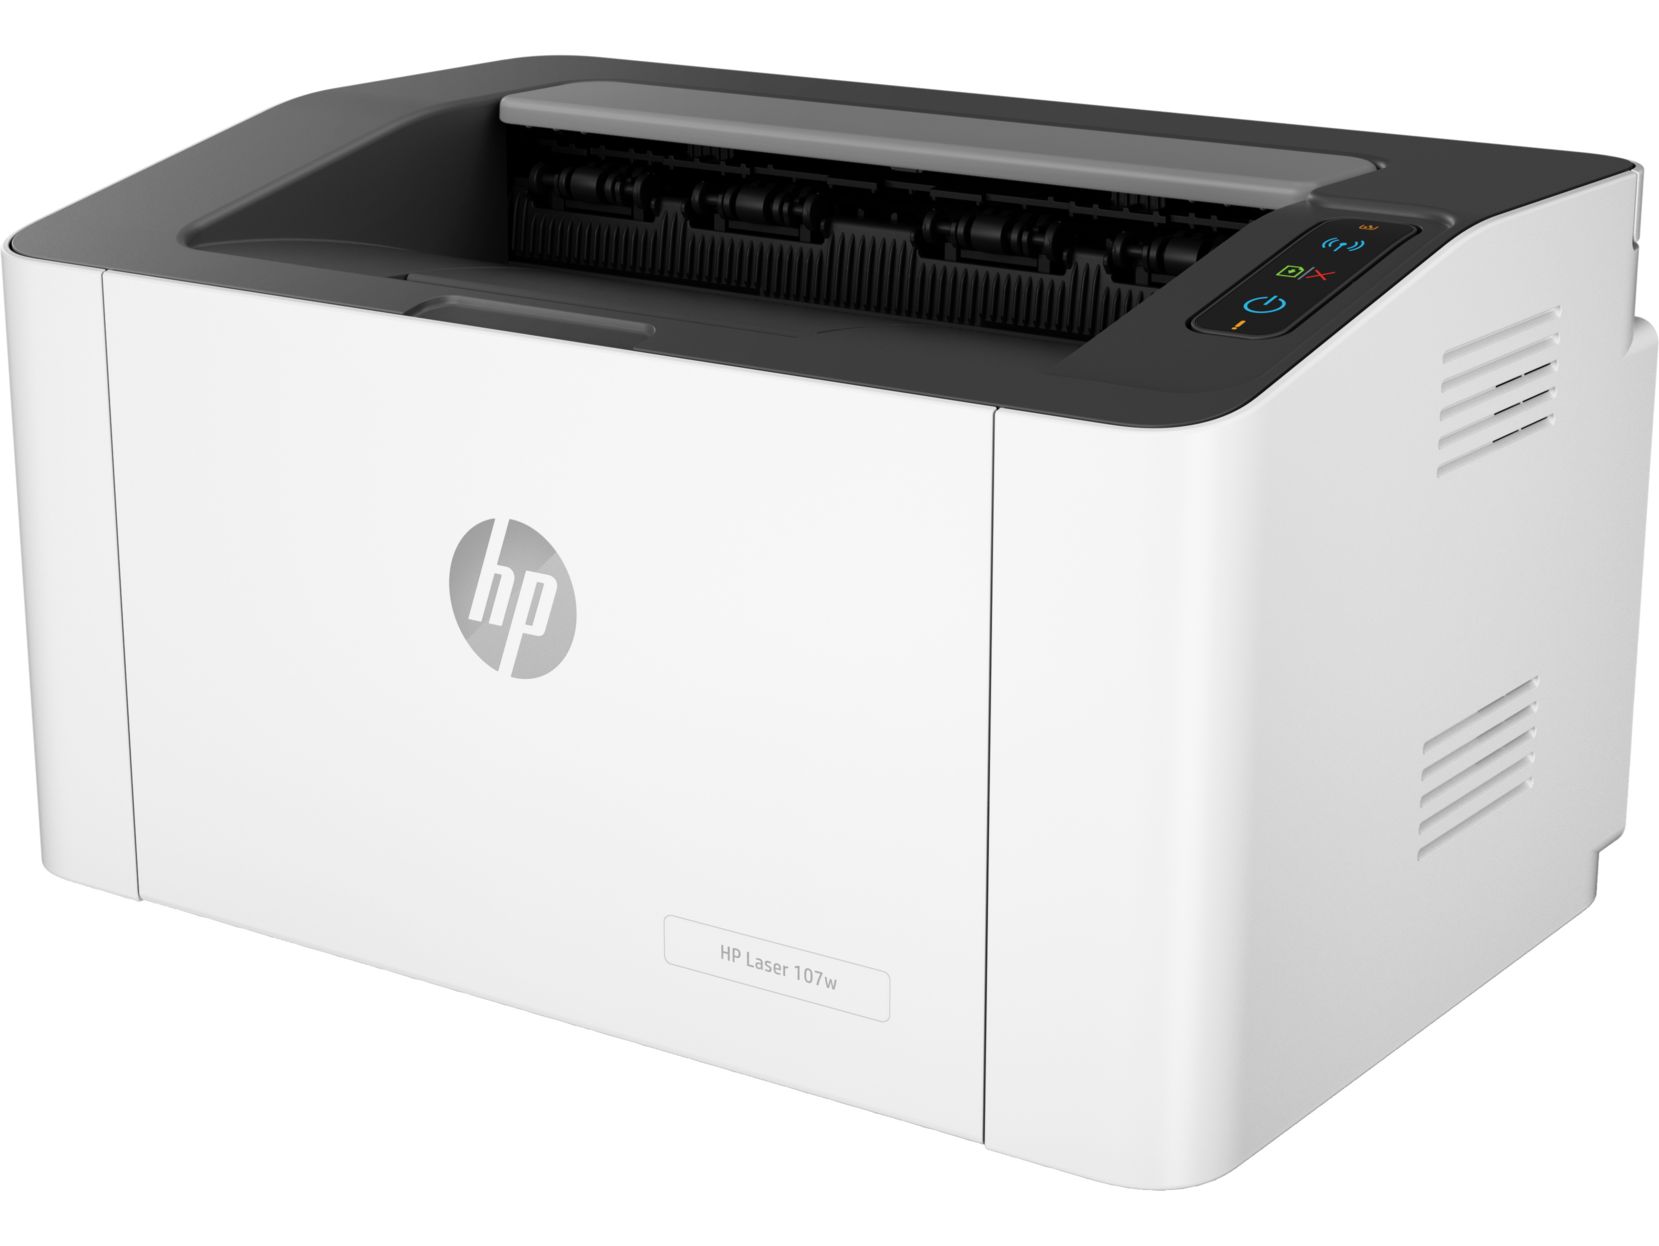 Лазерный принтер HP Laser 107w 4ZB78A#B19 - фото 1